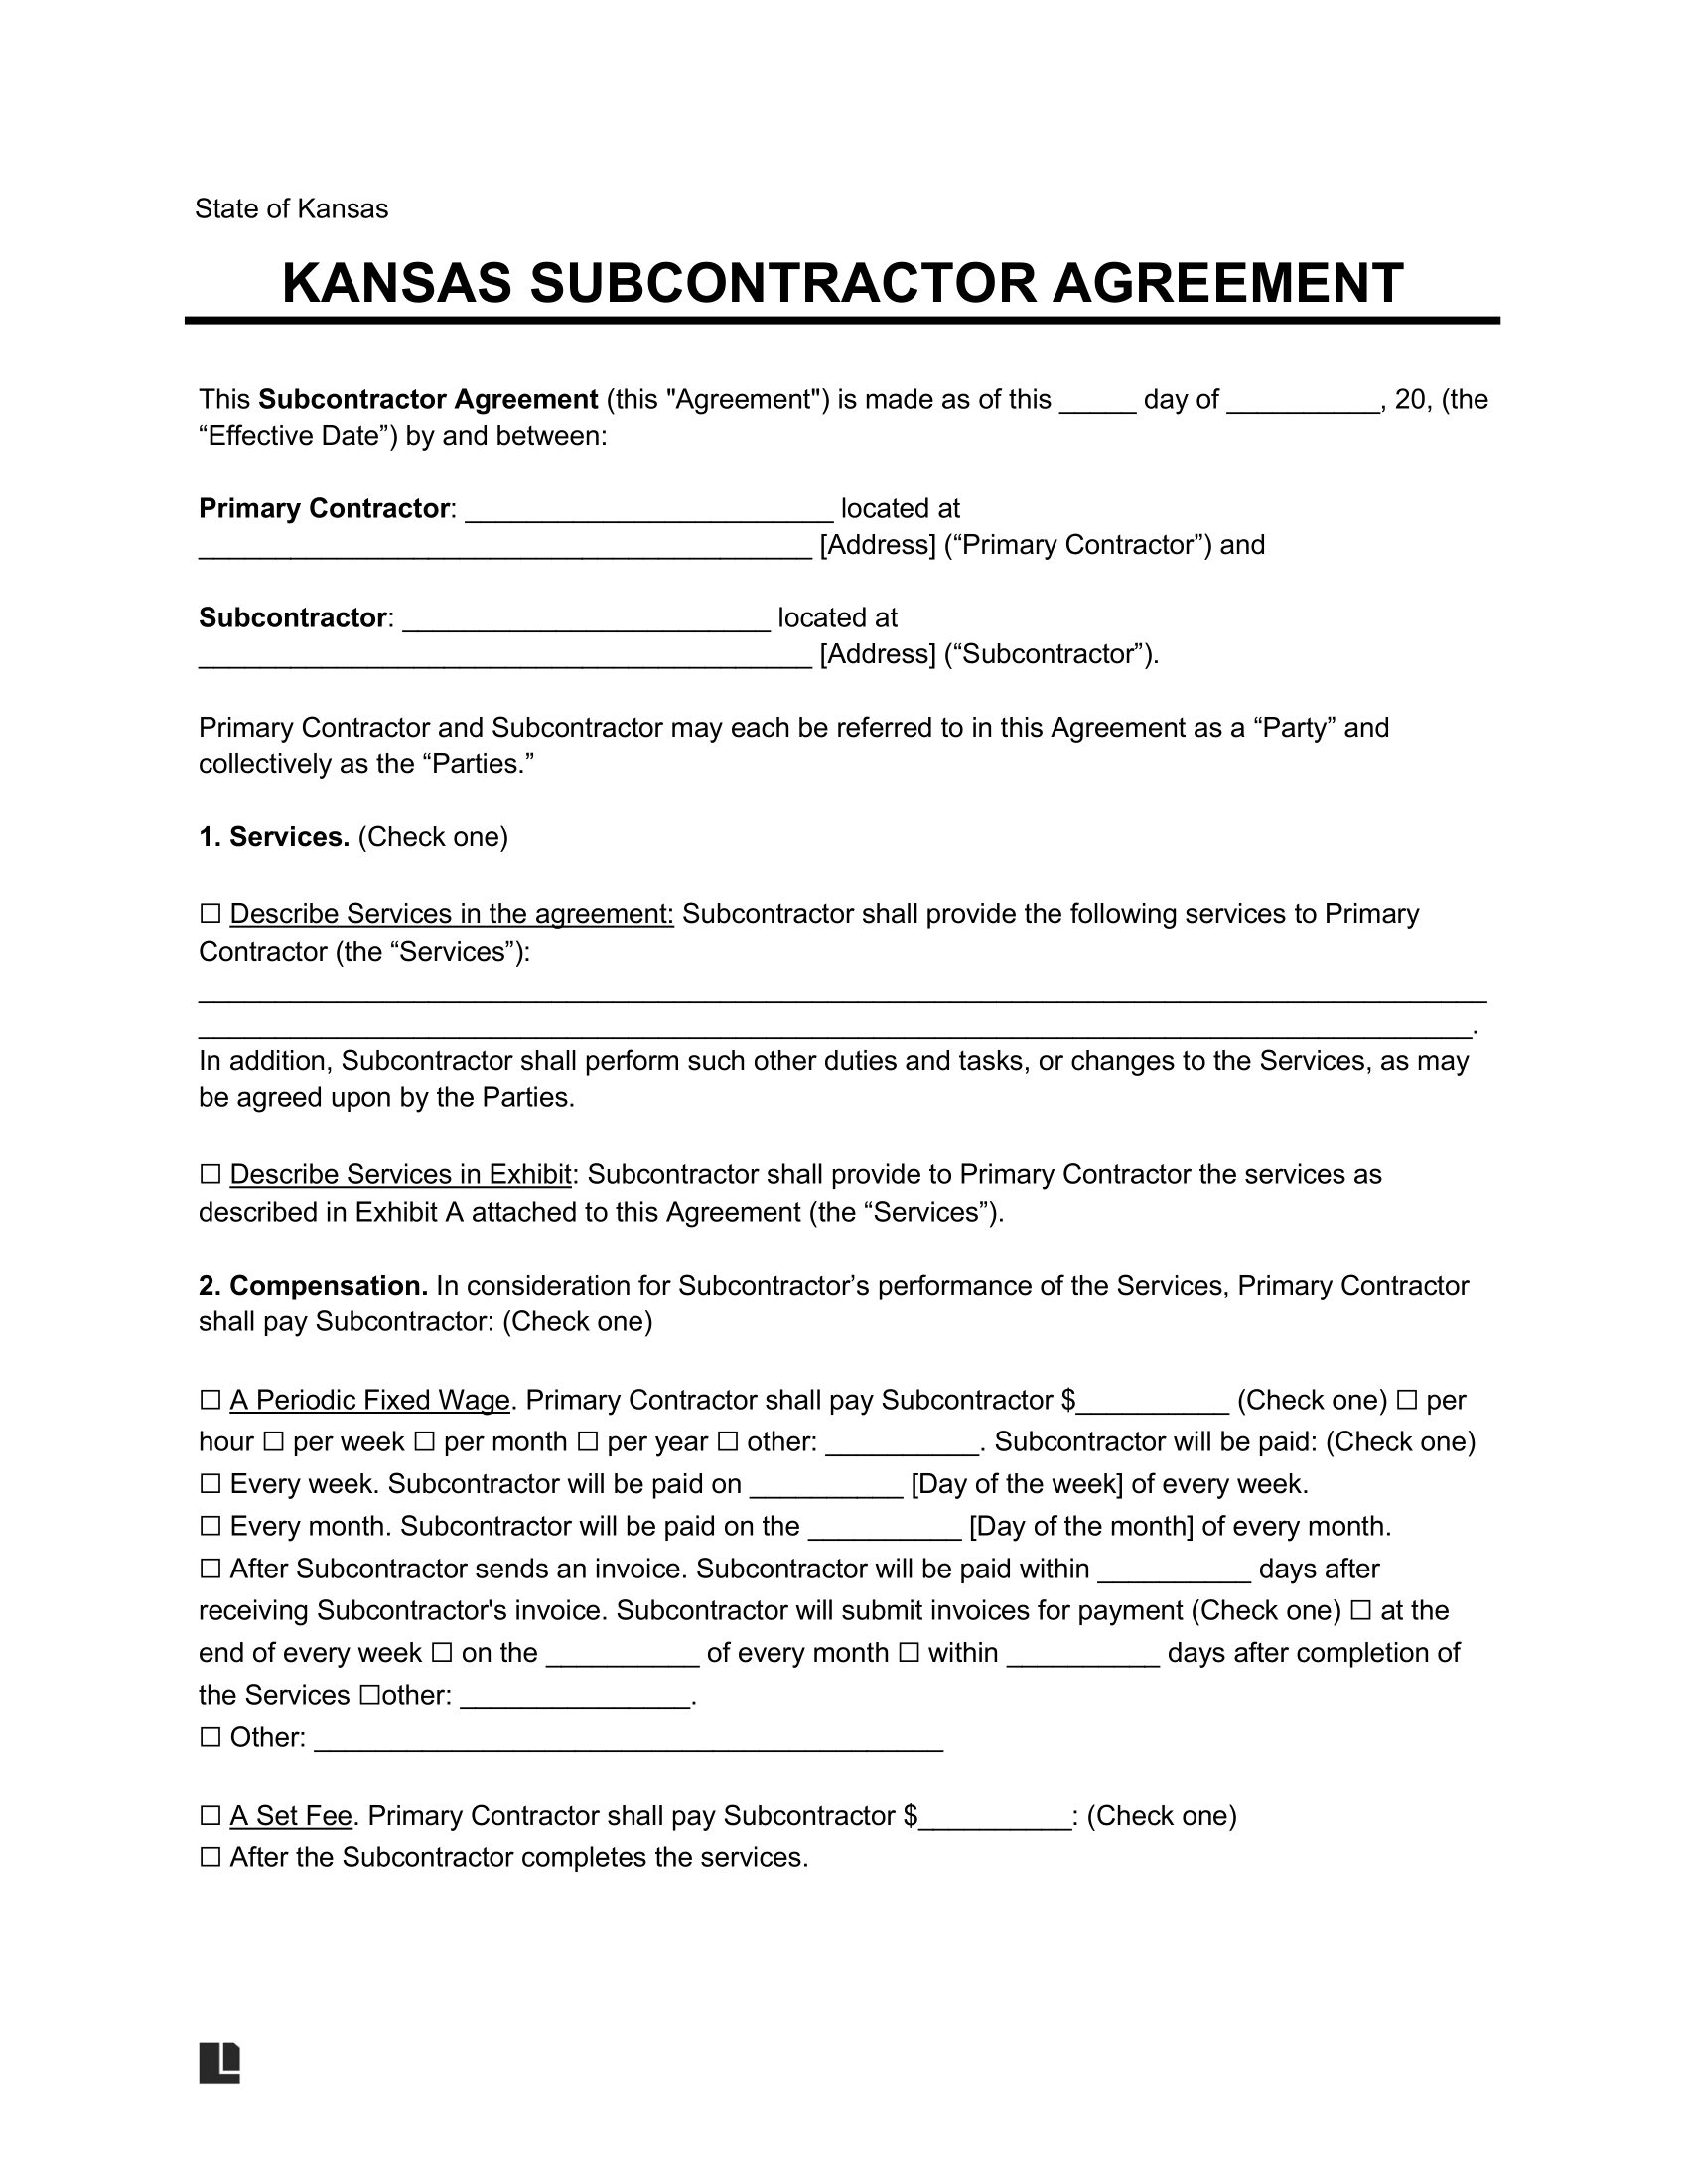 kansas subcontractor agreement template